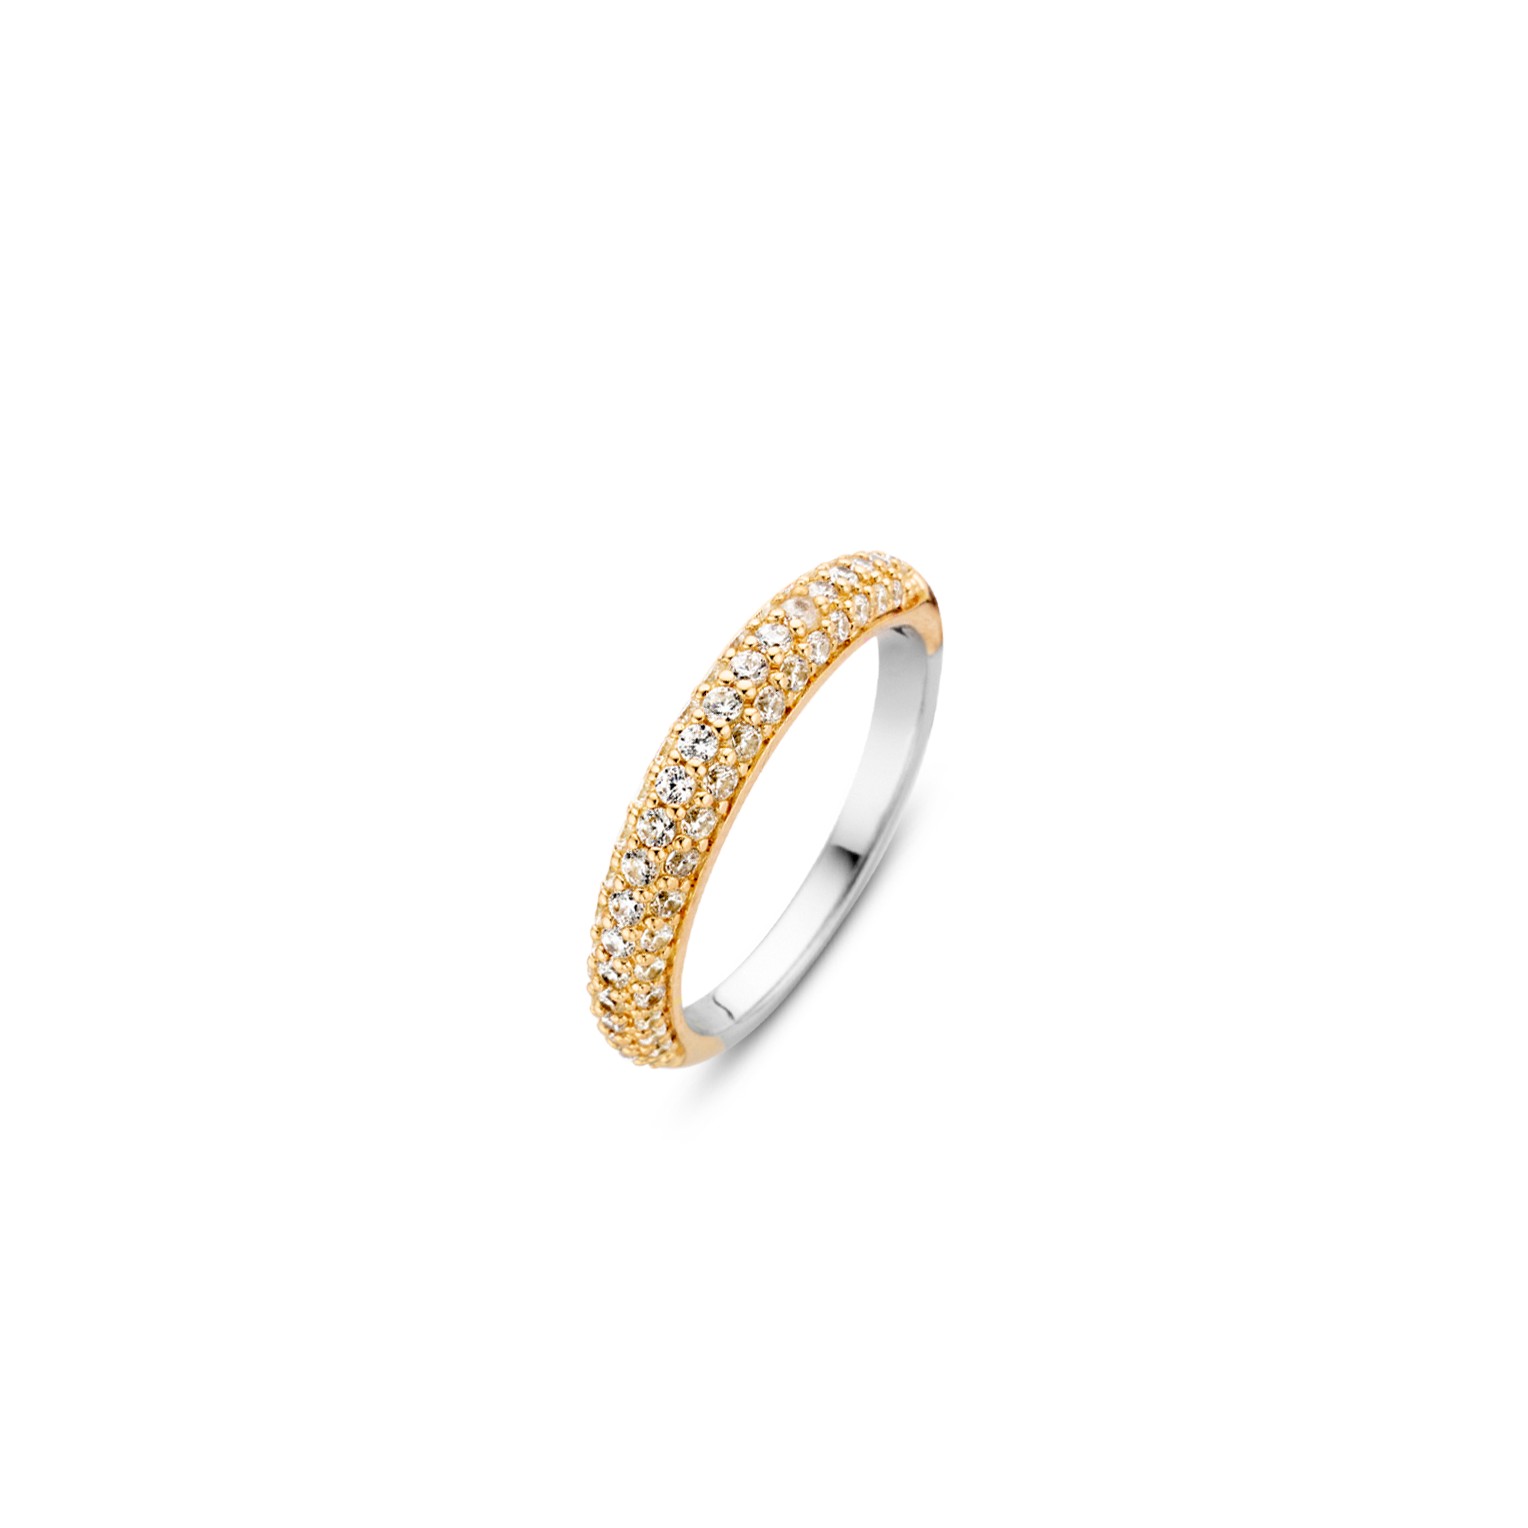 TI SENTO - Milano Ring 12105ZY Gala Jewelers Inc. White Oak, PA